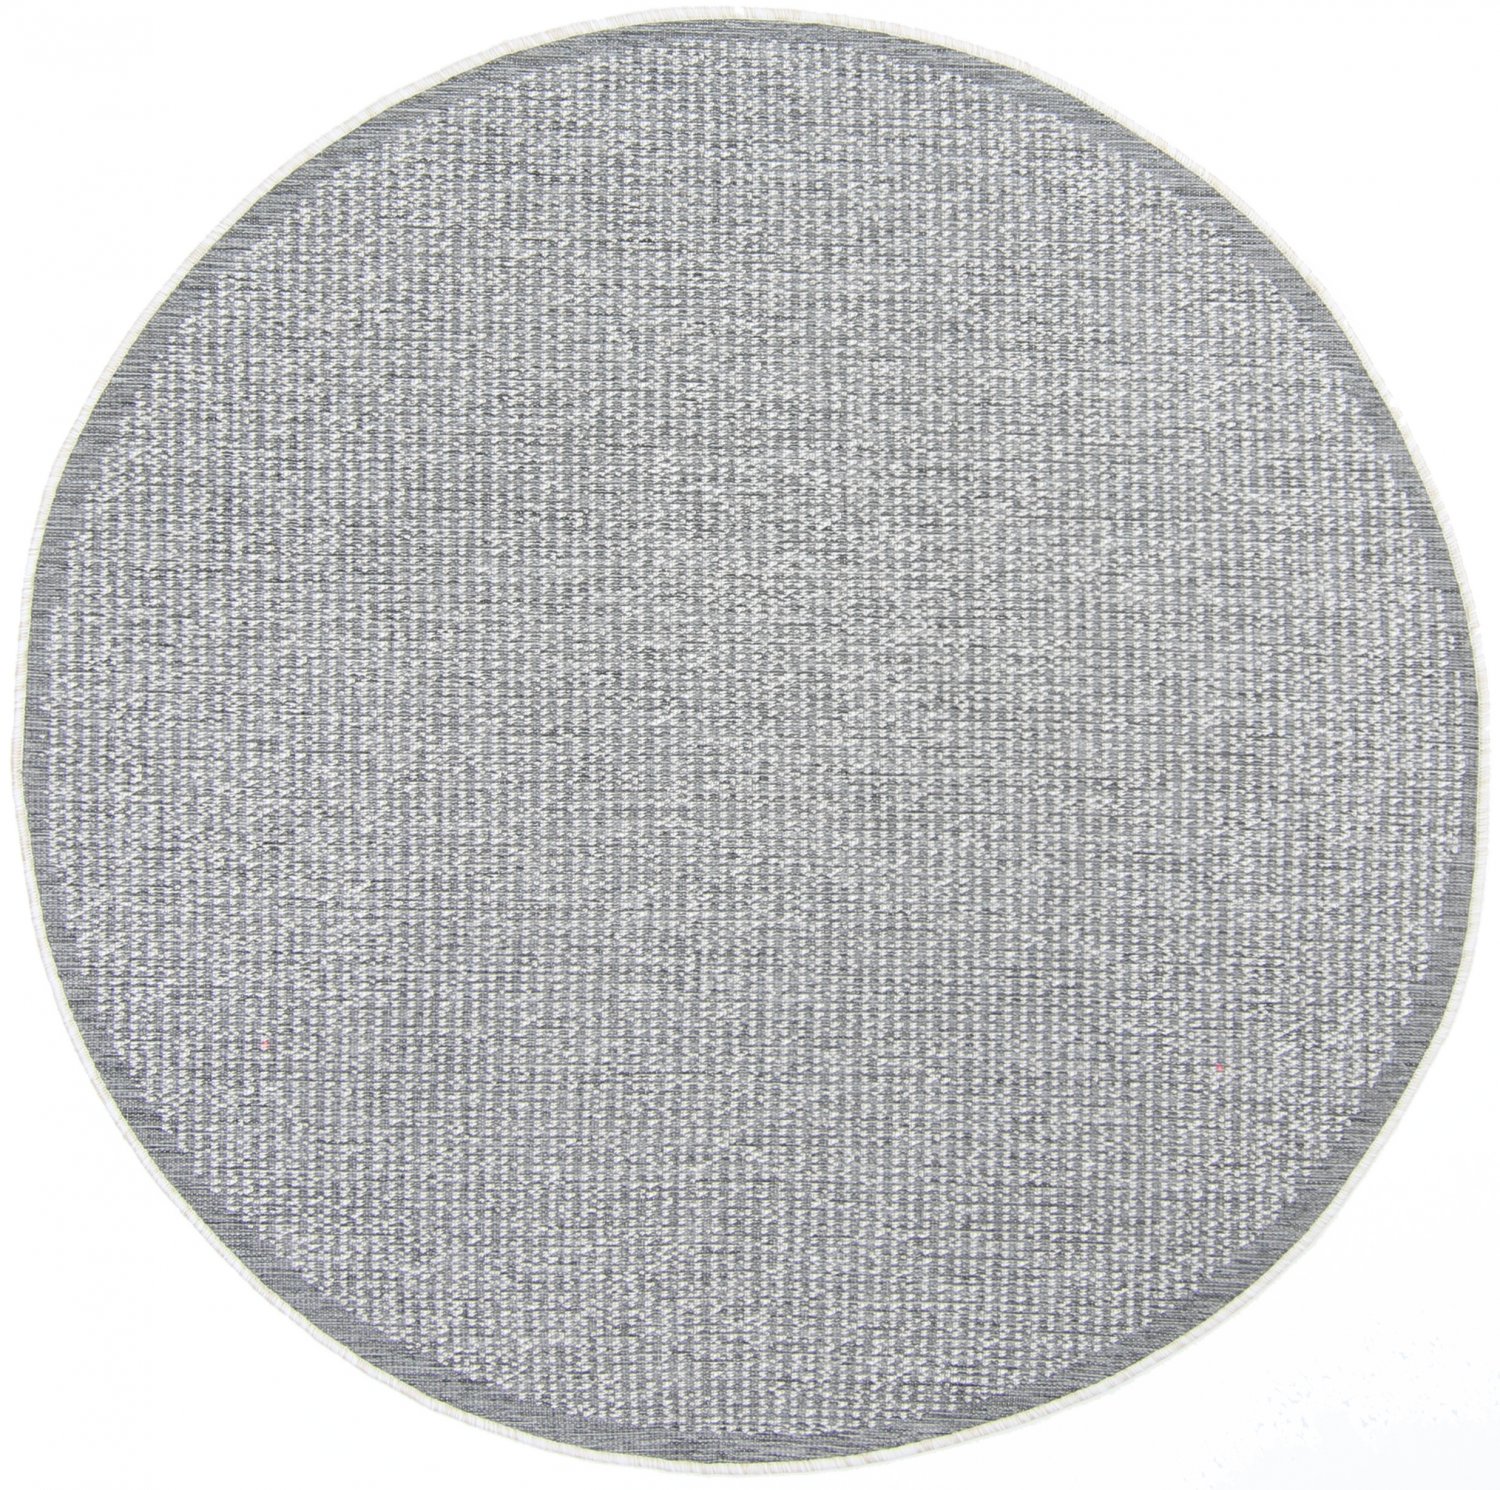 Round rug - Tromsø (grey)